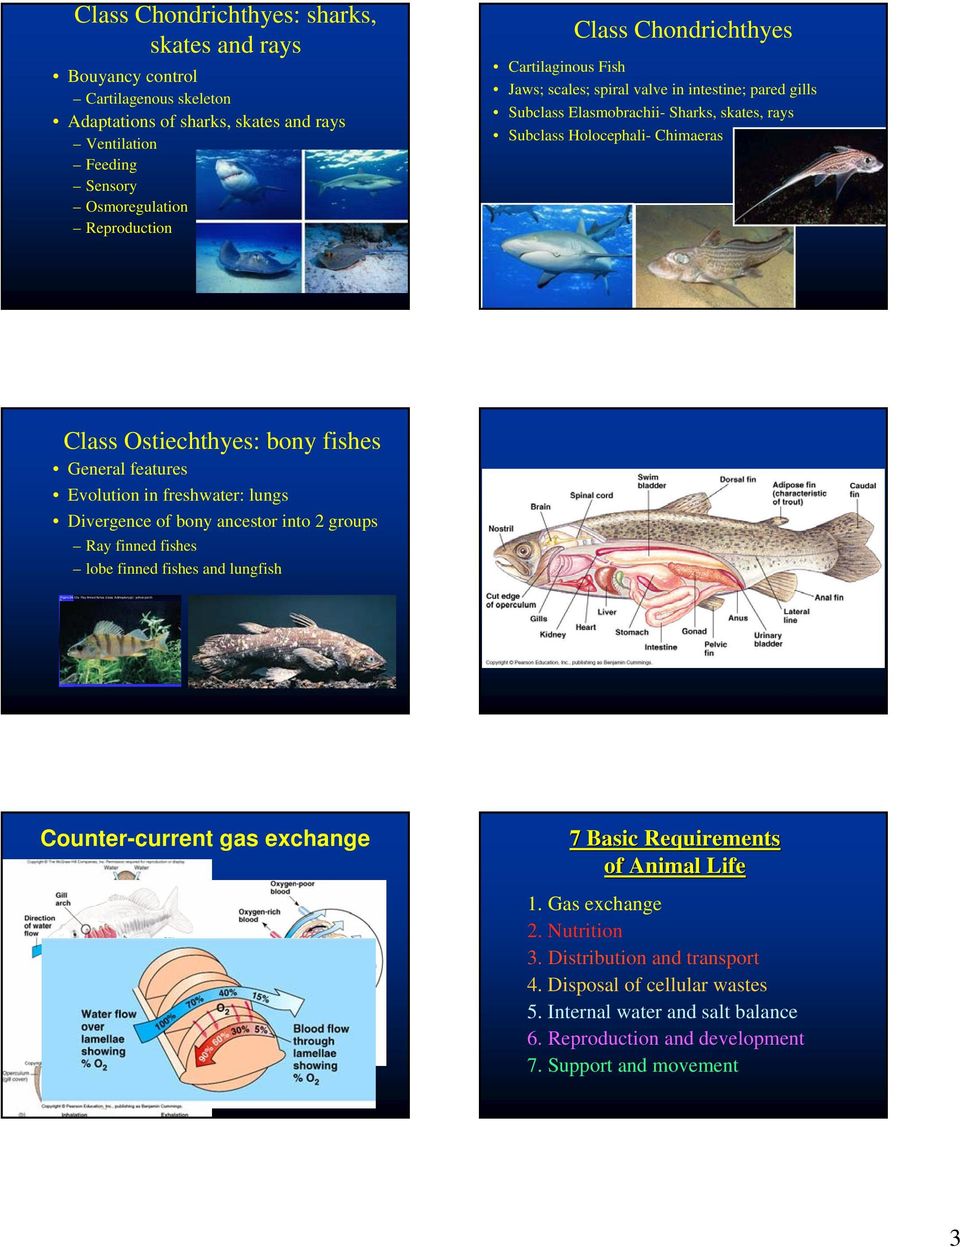 Feeding Sensory Osmoregulation Reproduction Class Chondrichthyes Cartilaginous Fish Jaws; scales; spiral valve in intestine; pared gills Subclass Elasmobrachii- Sharks, skates, rays Subclass